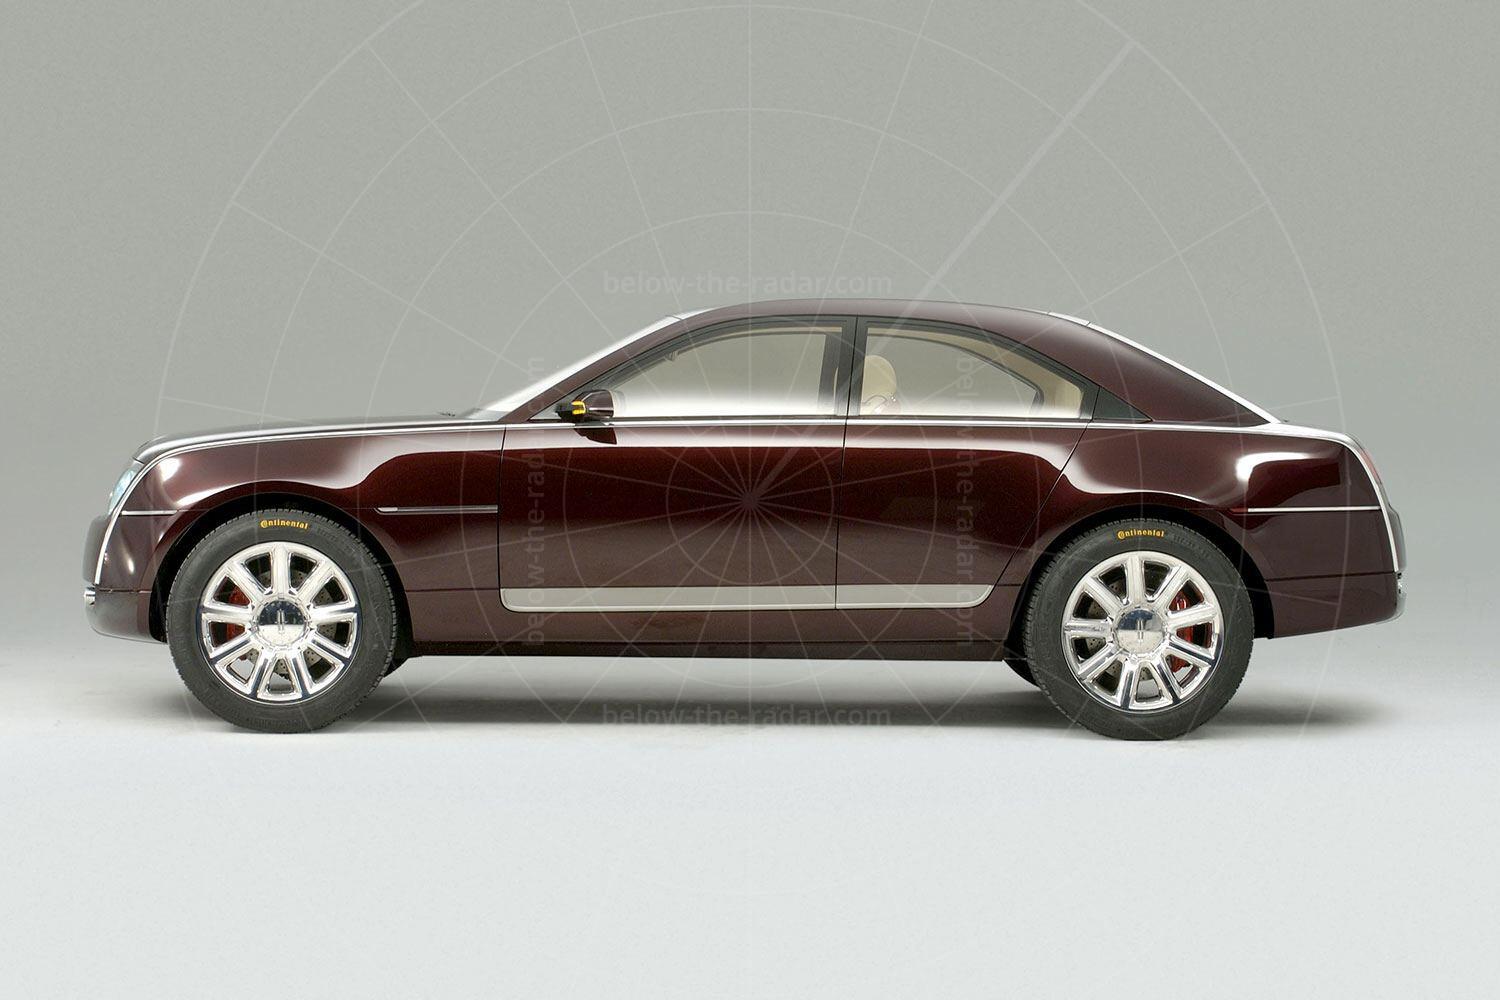 Lincoln Navicross concept Pic: Lincoln | Lincoln Navicross concept